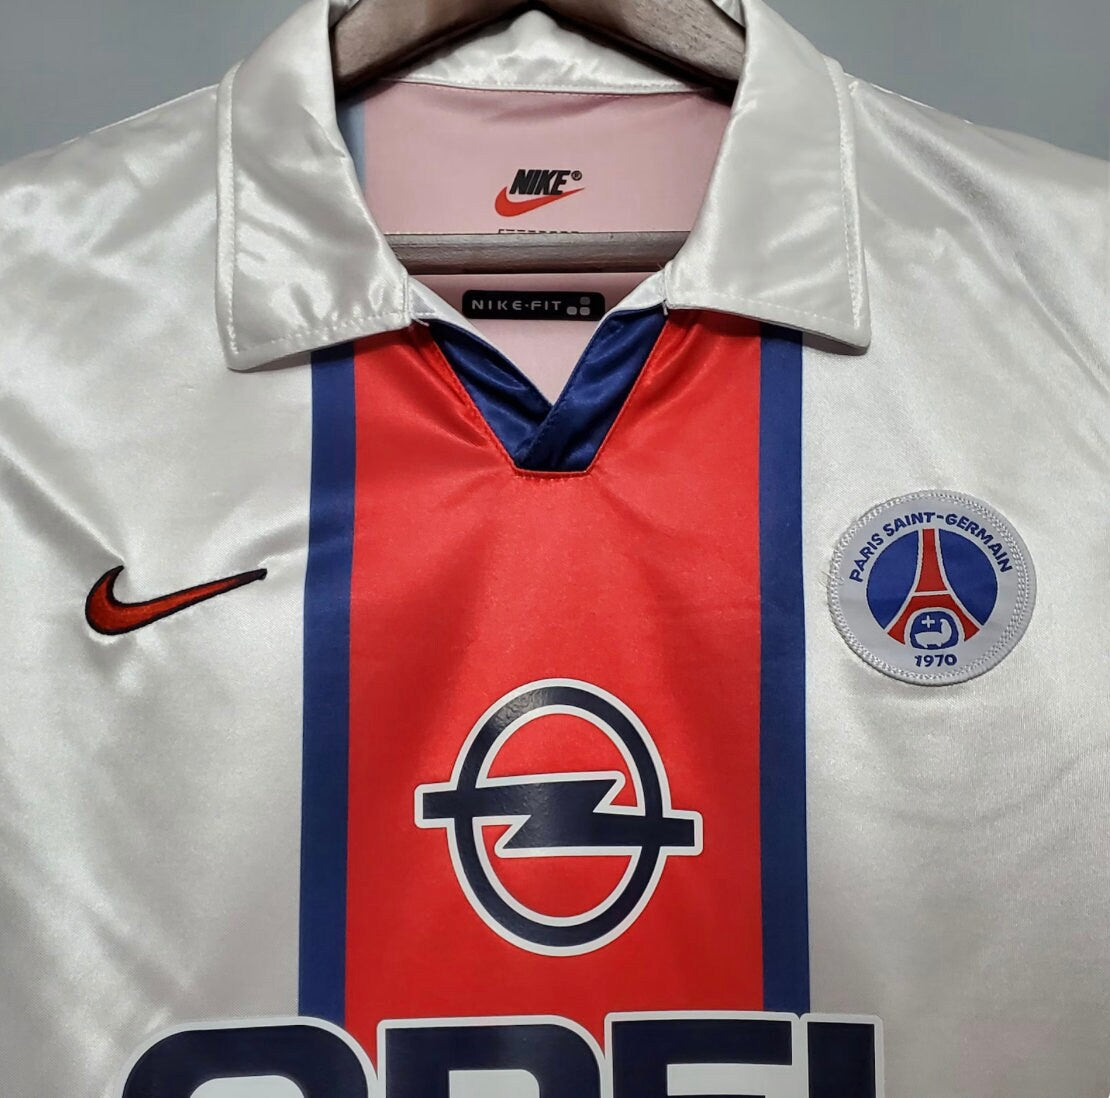 PSG 1998 retro away jersey